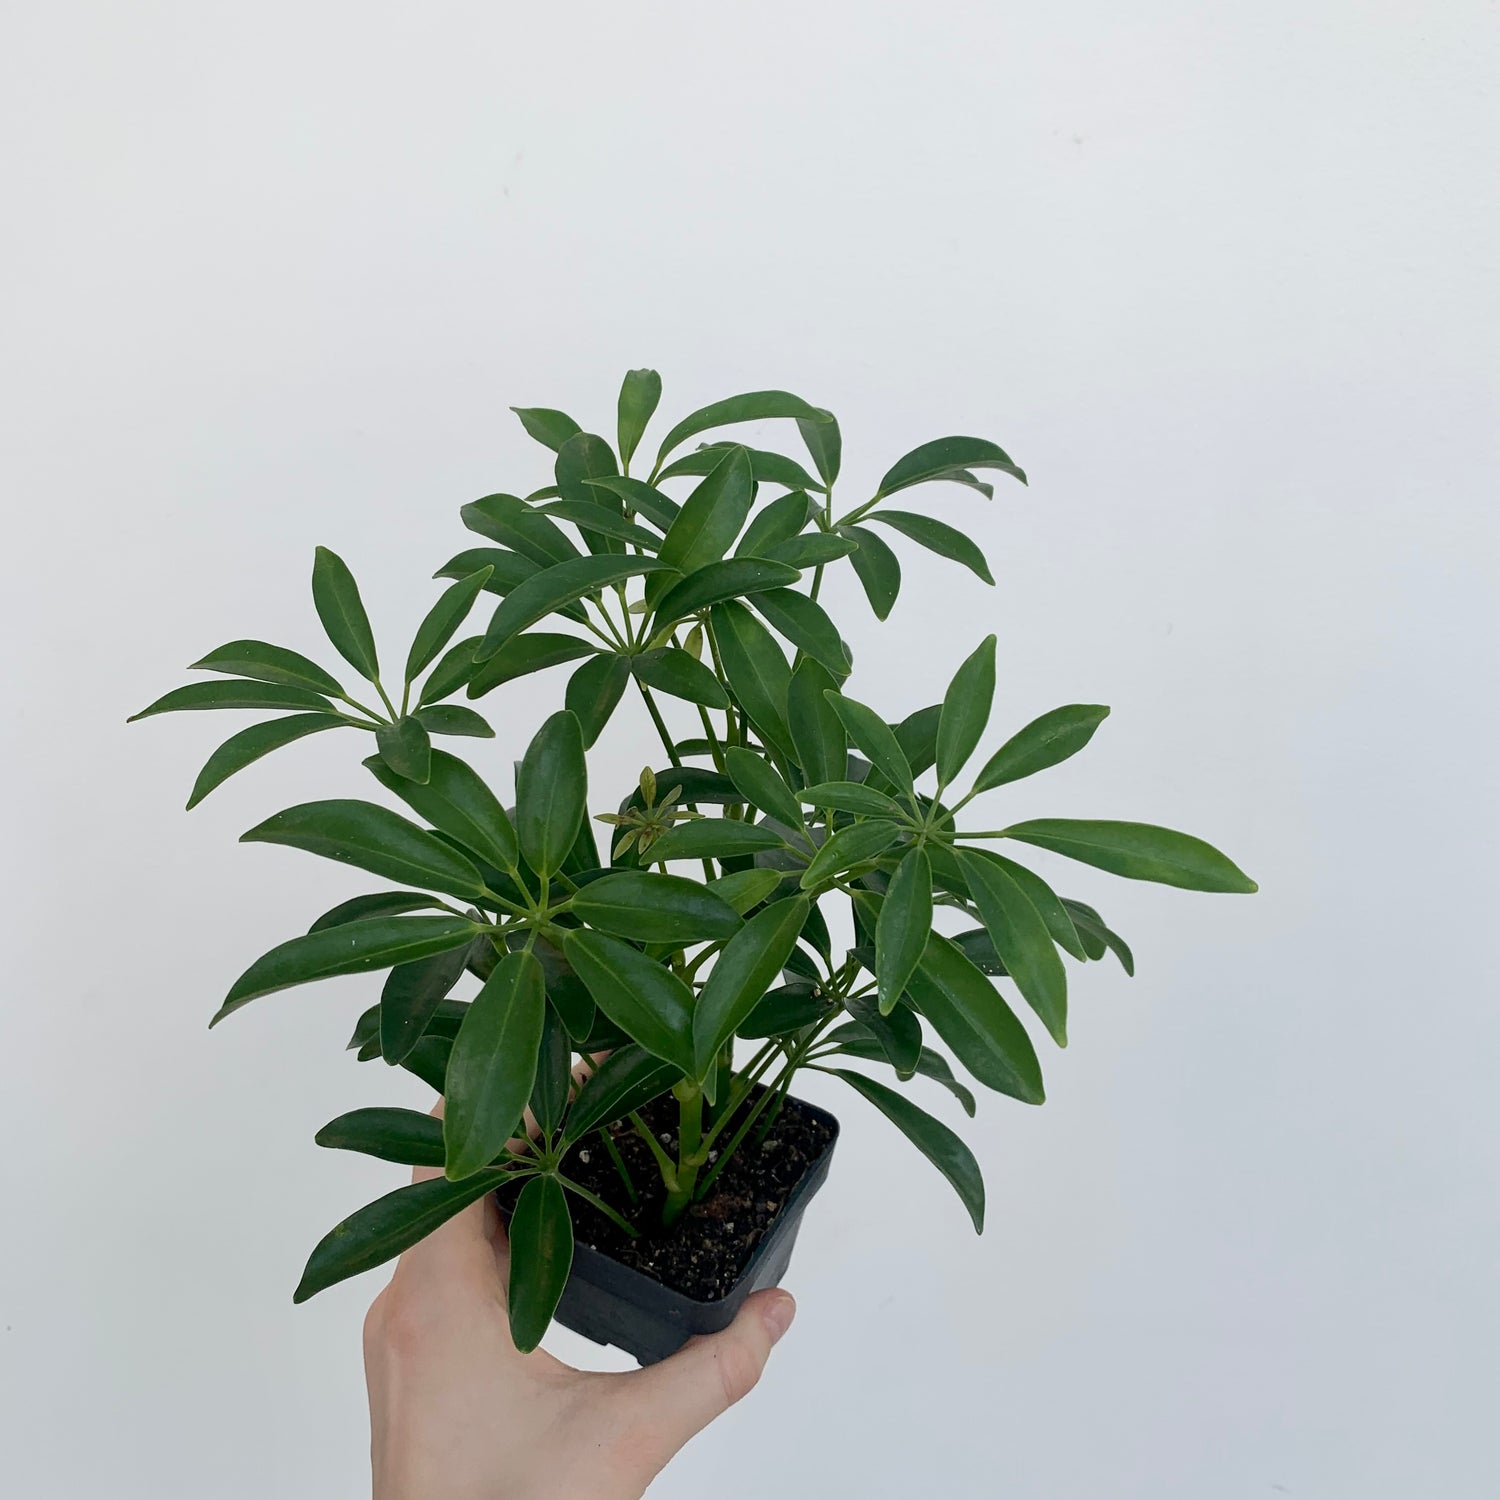 Schefflera arboricola - Umbrella Tree